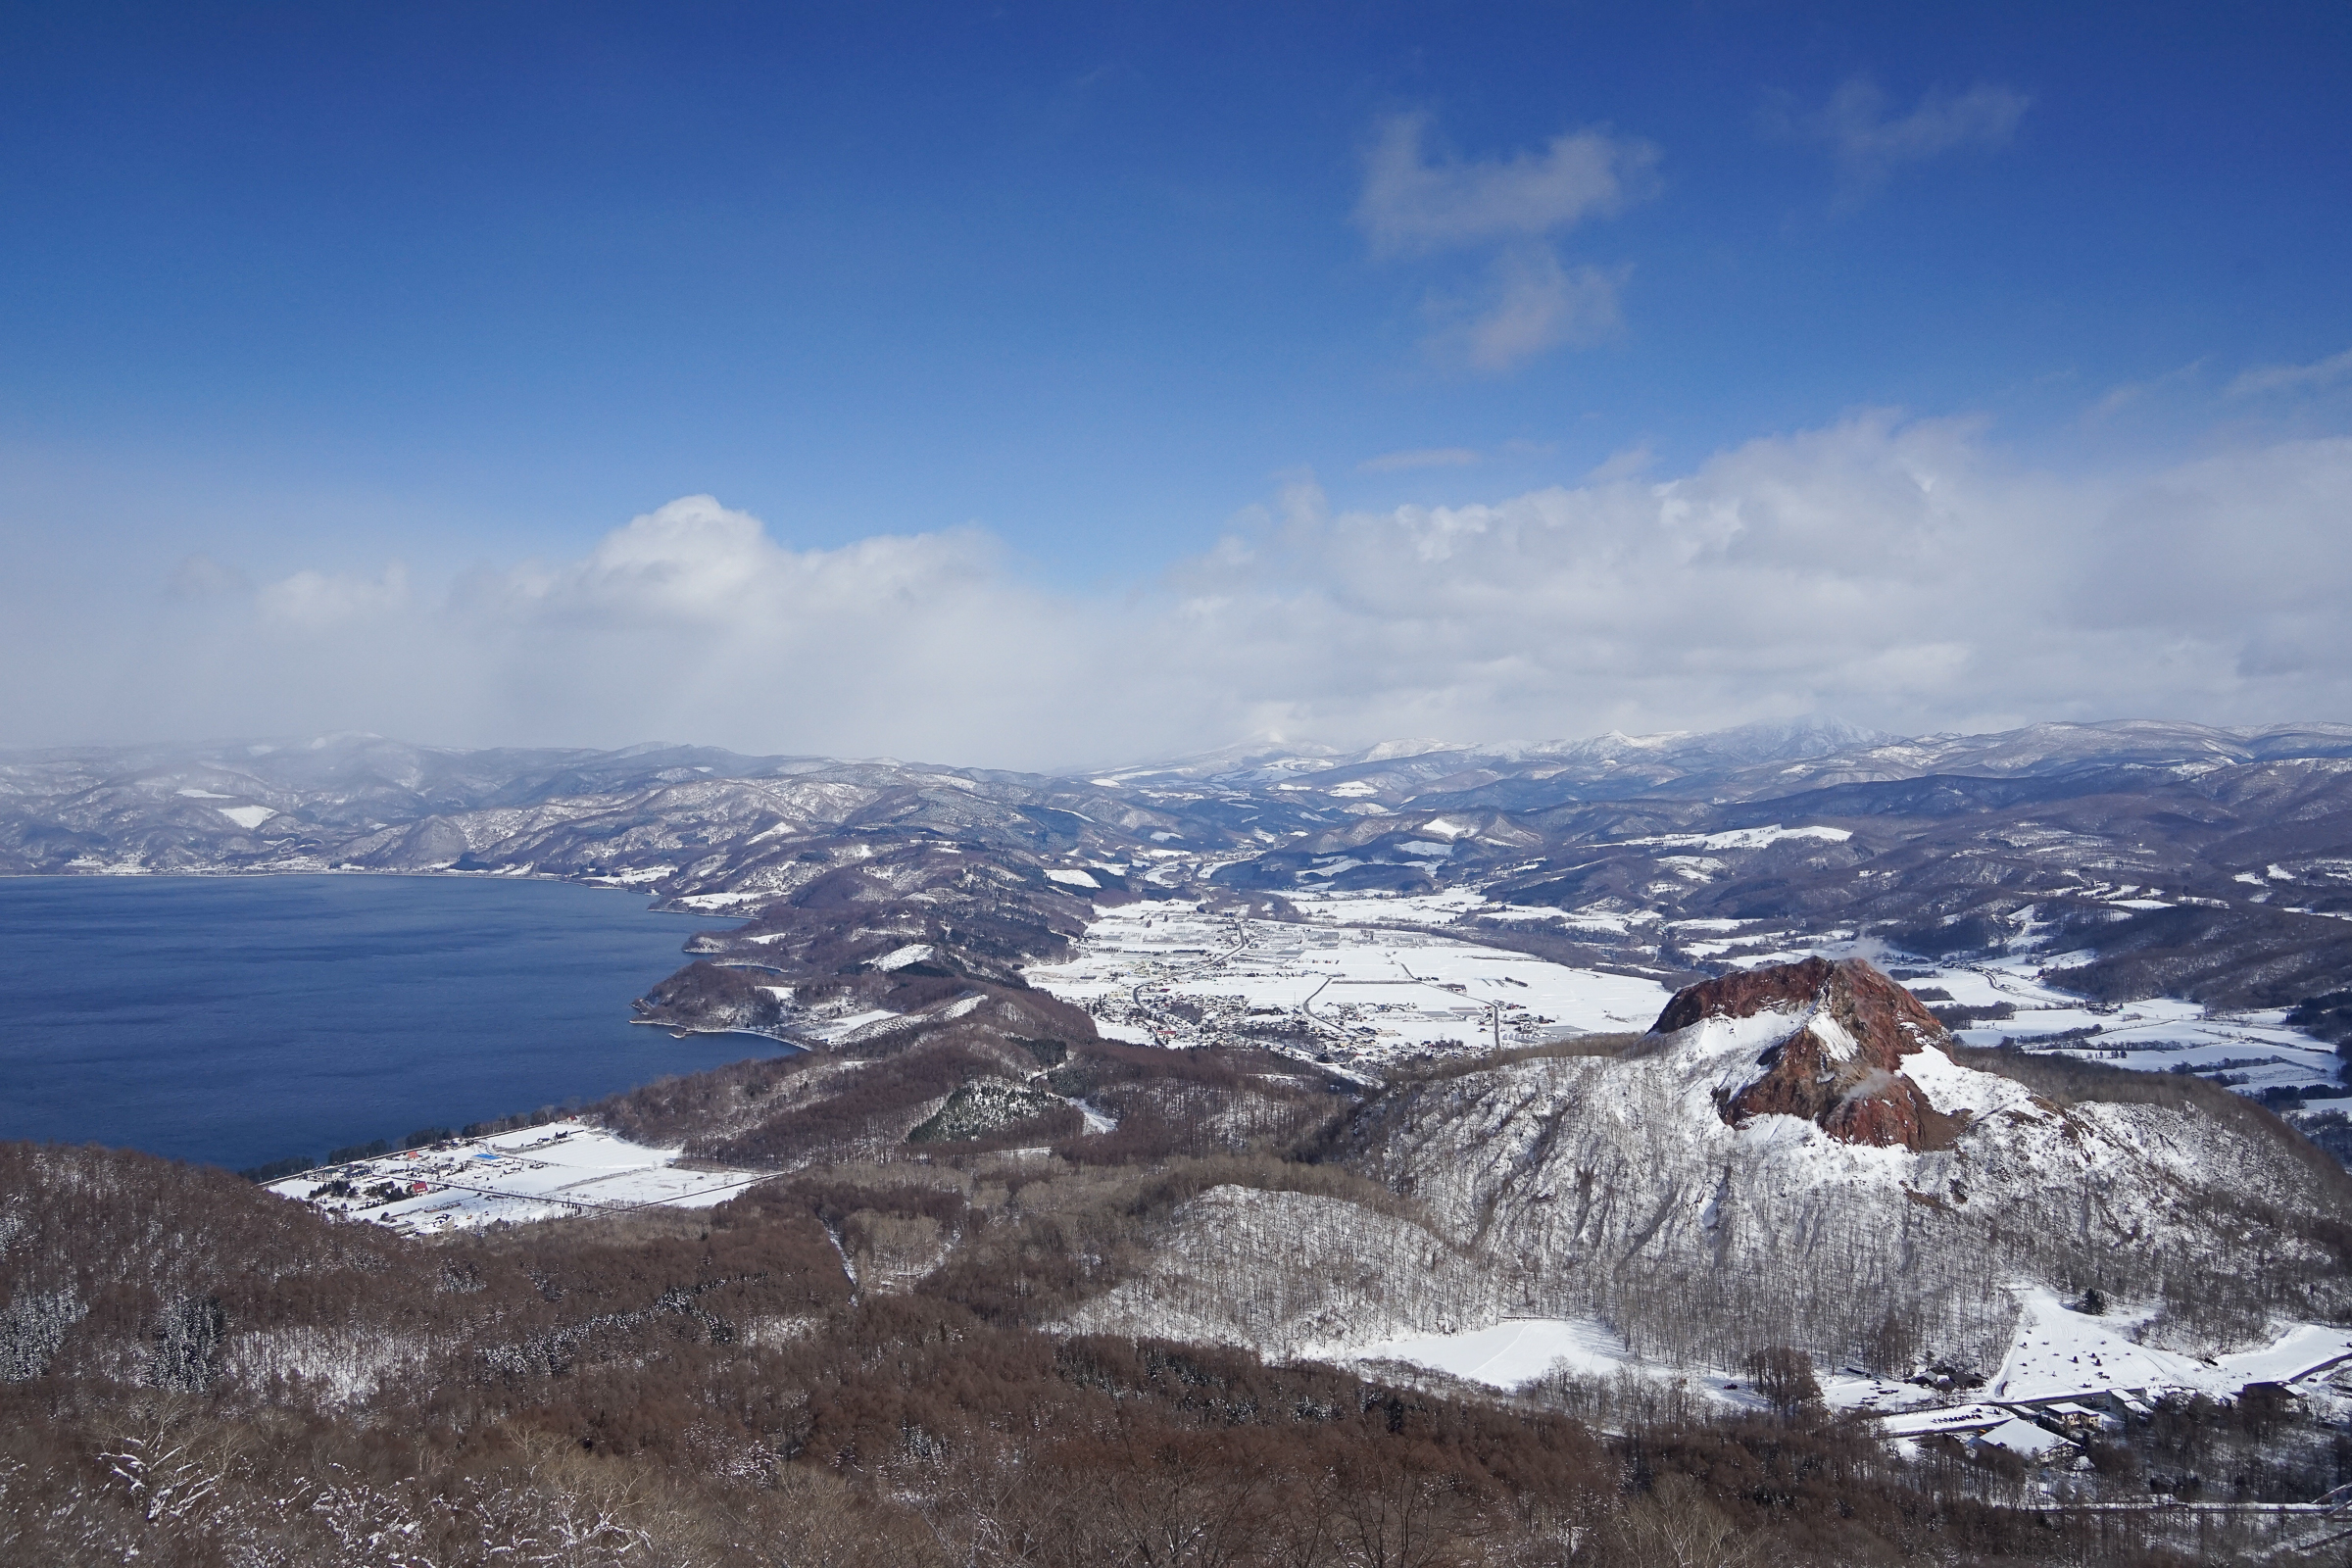 The view of Lake Toya & Showa-Shinzan from the Mt. Usu Ropeway in winter.